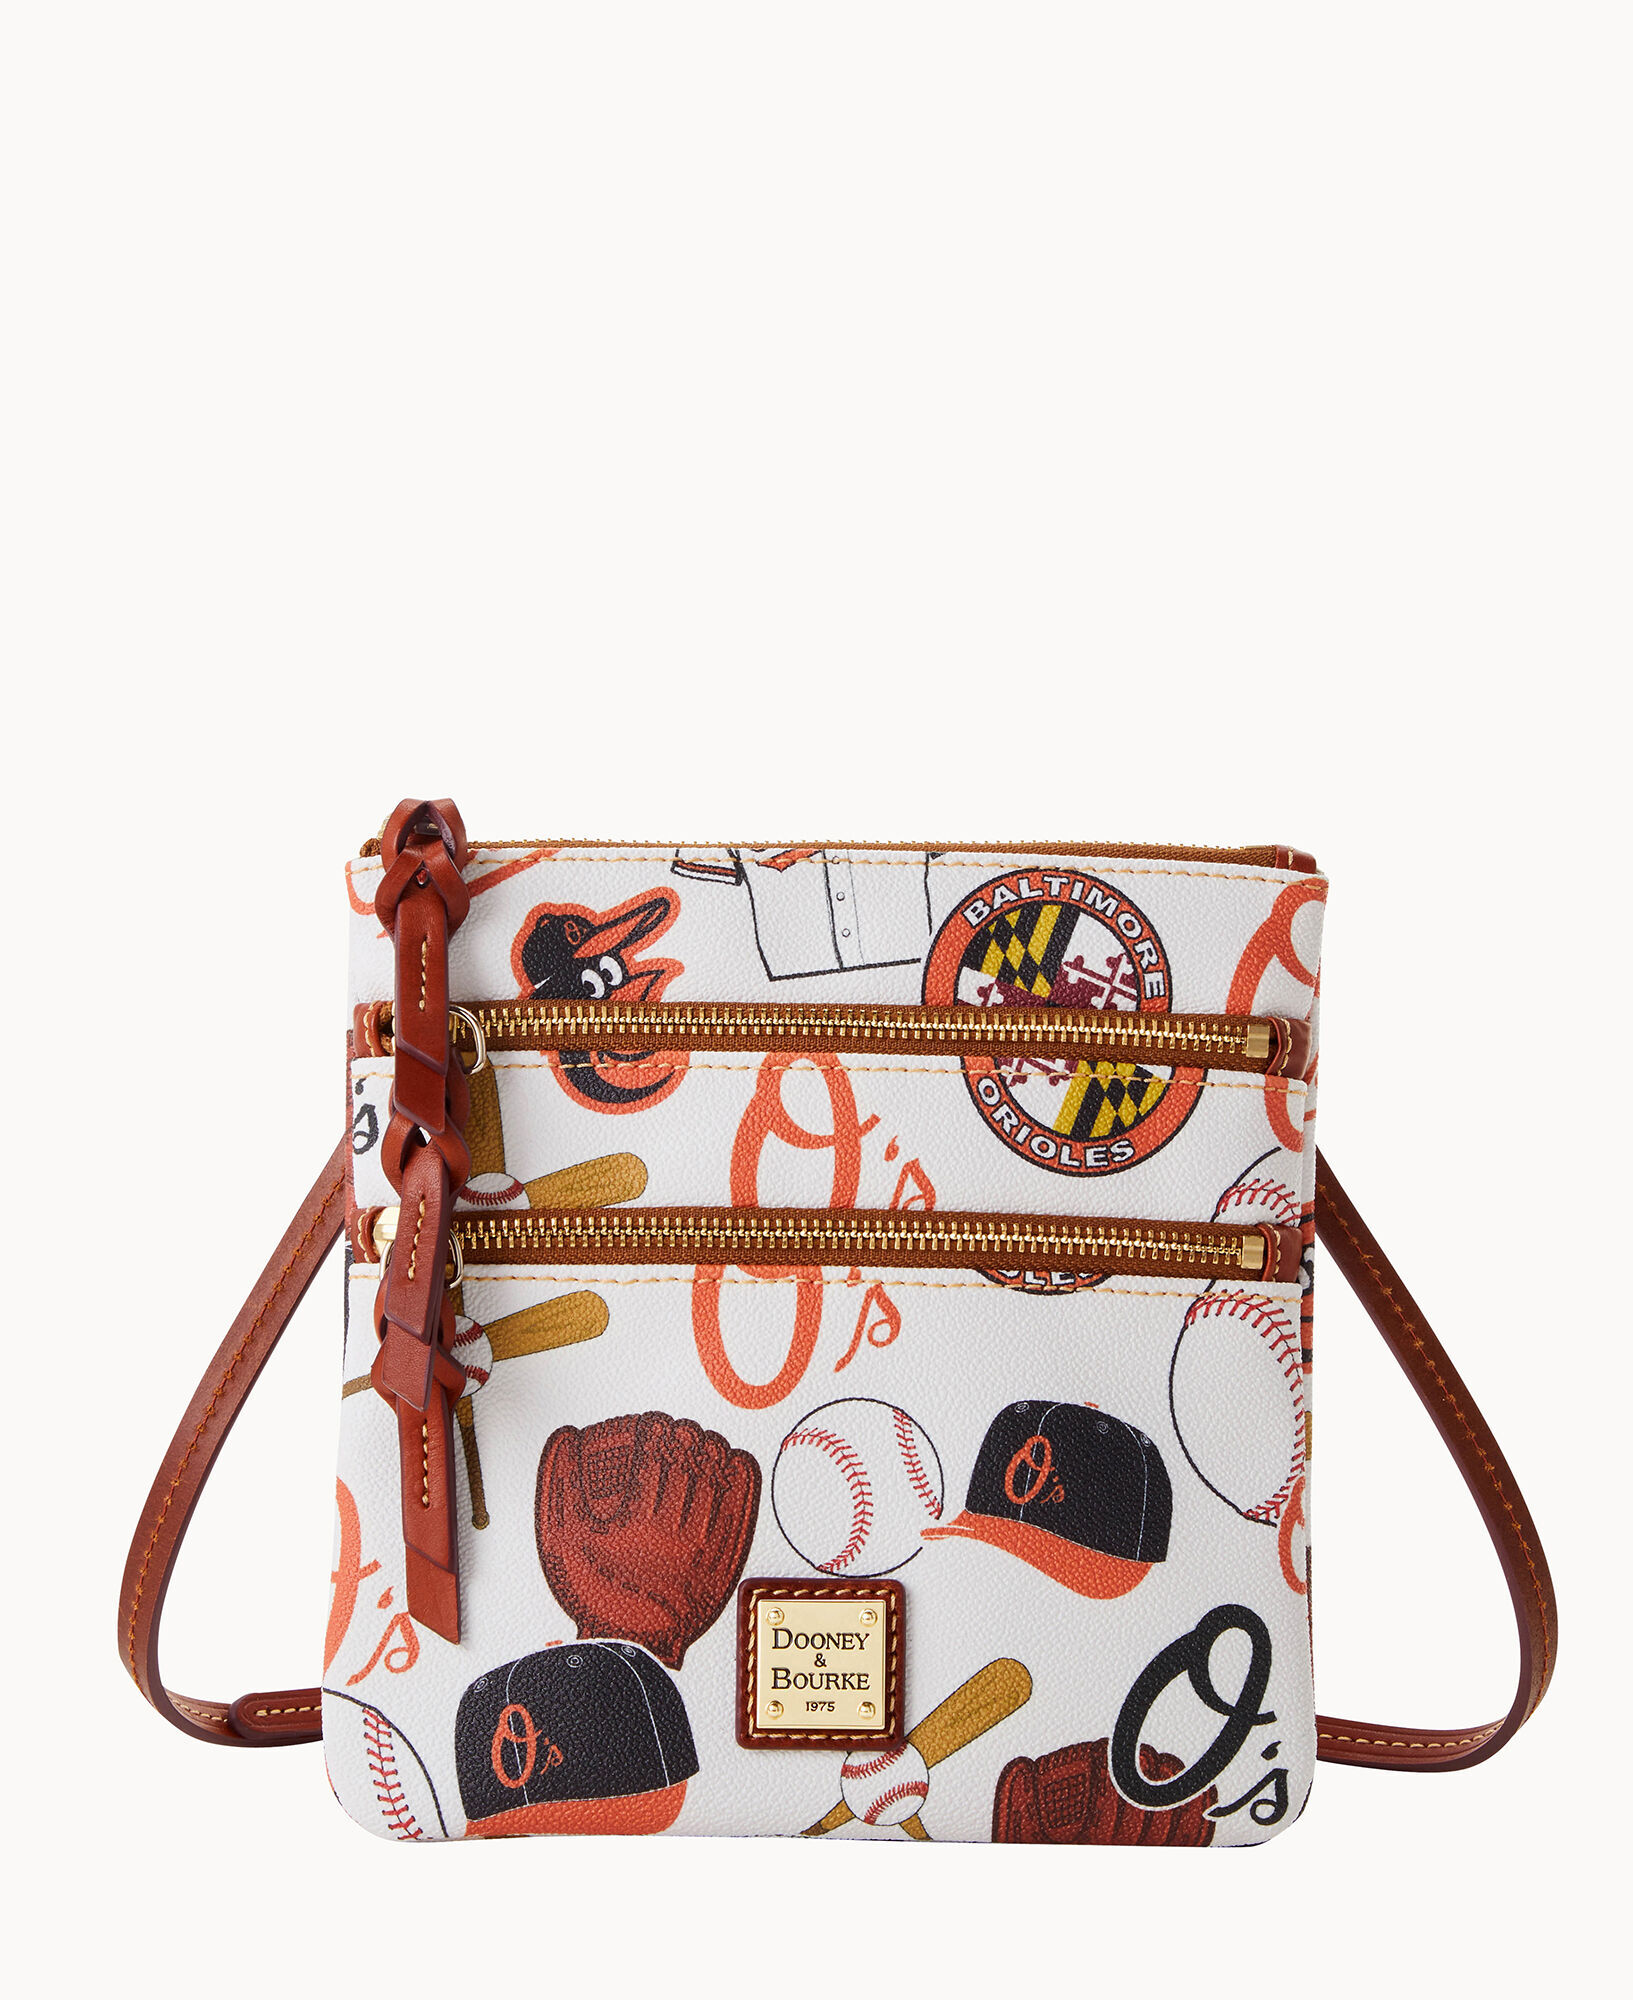 Baltimore Orioles | Shop MLB Team Bags & Accessories | Dooney & Bourke